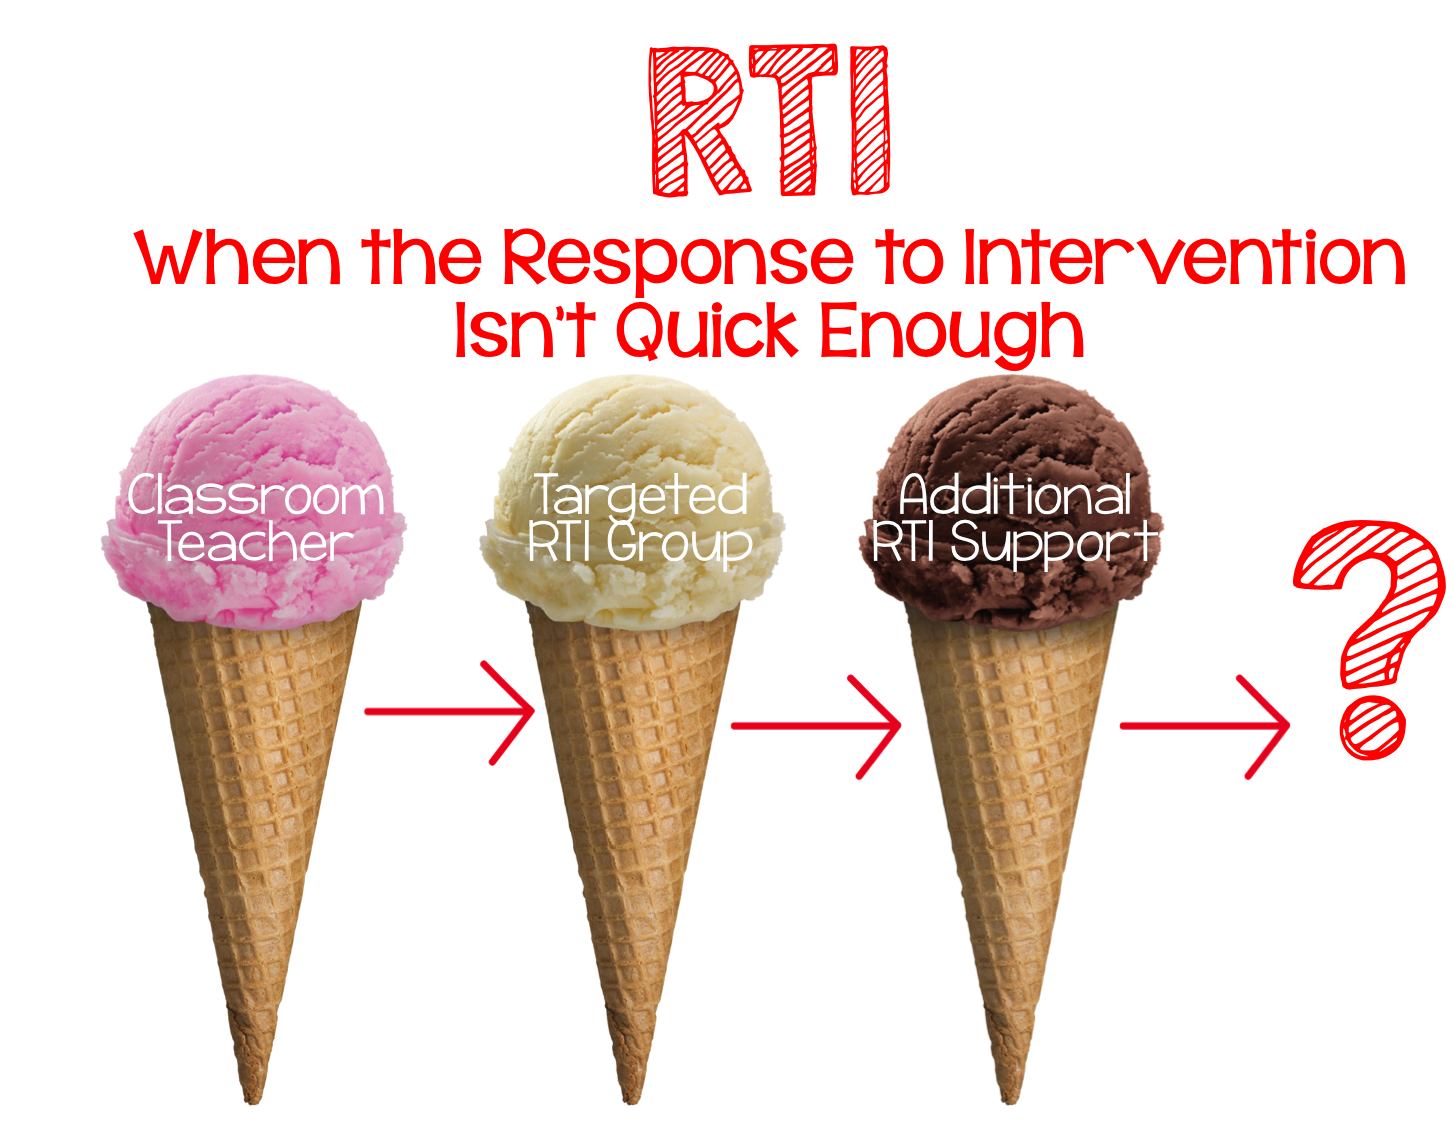 RTI, Response to Intervention